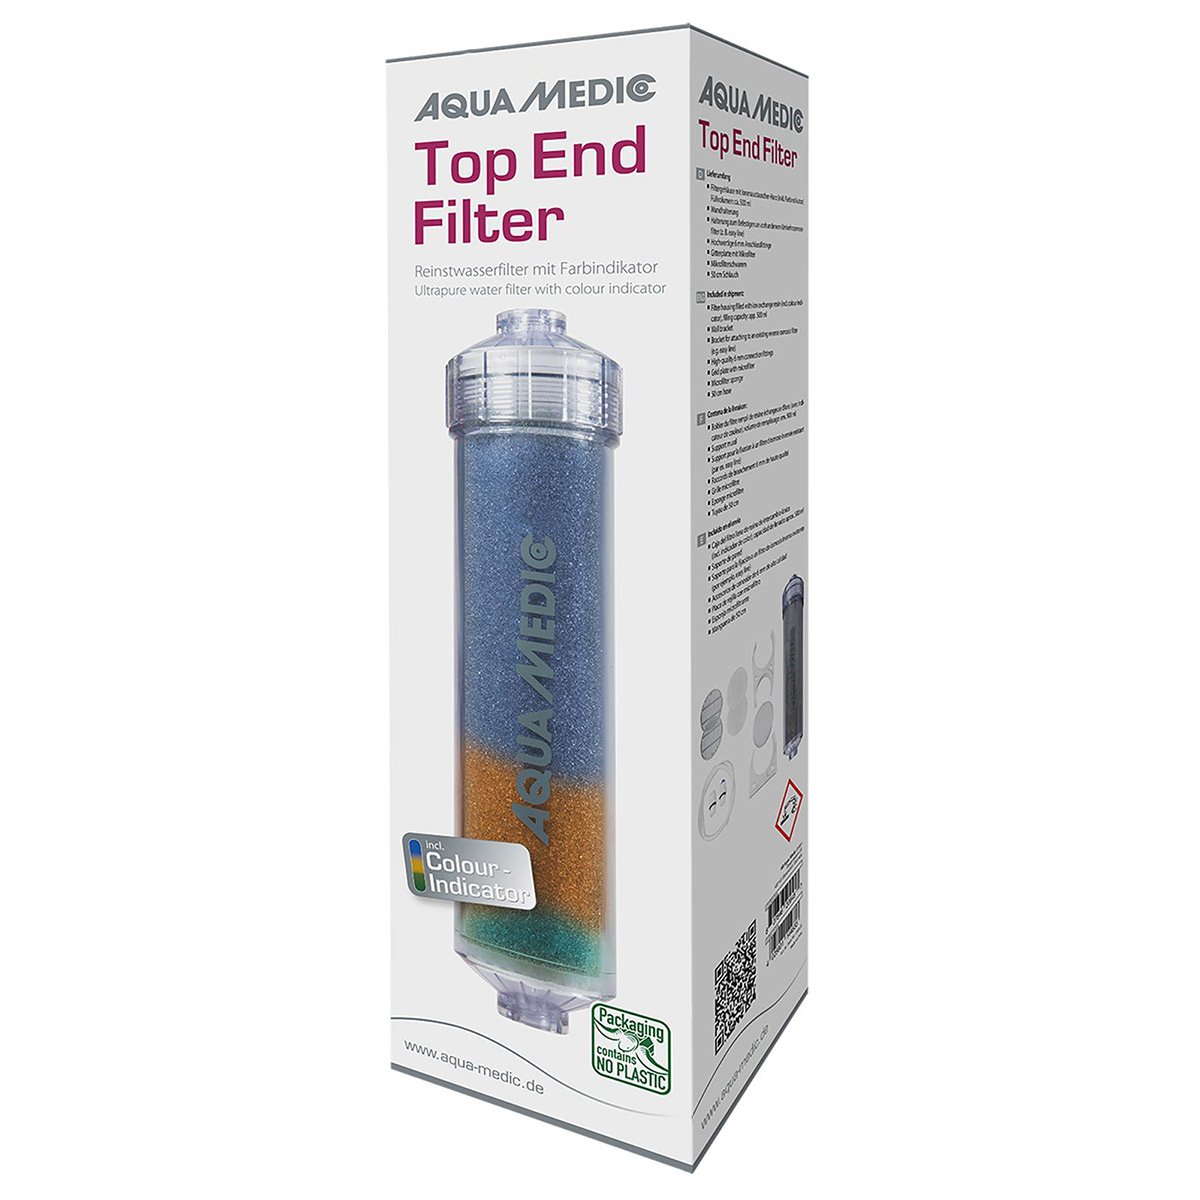 Aqua Medic Reinstwasserfilter Top End Filter + Farbindikator von Aqua Medic